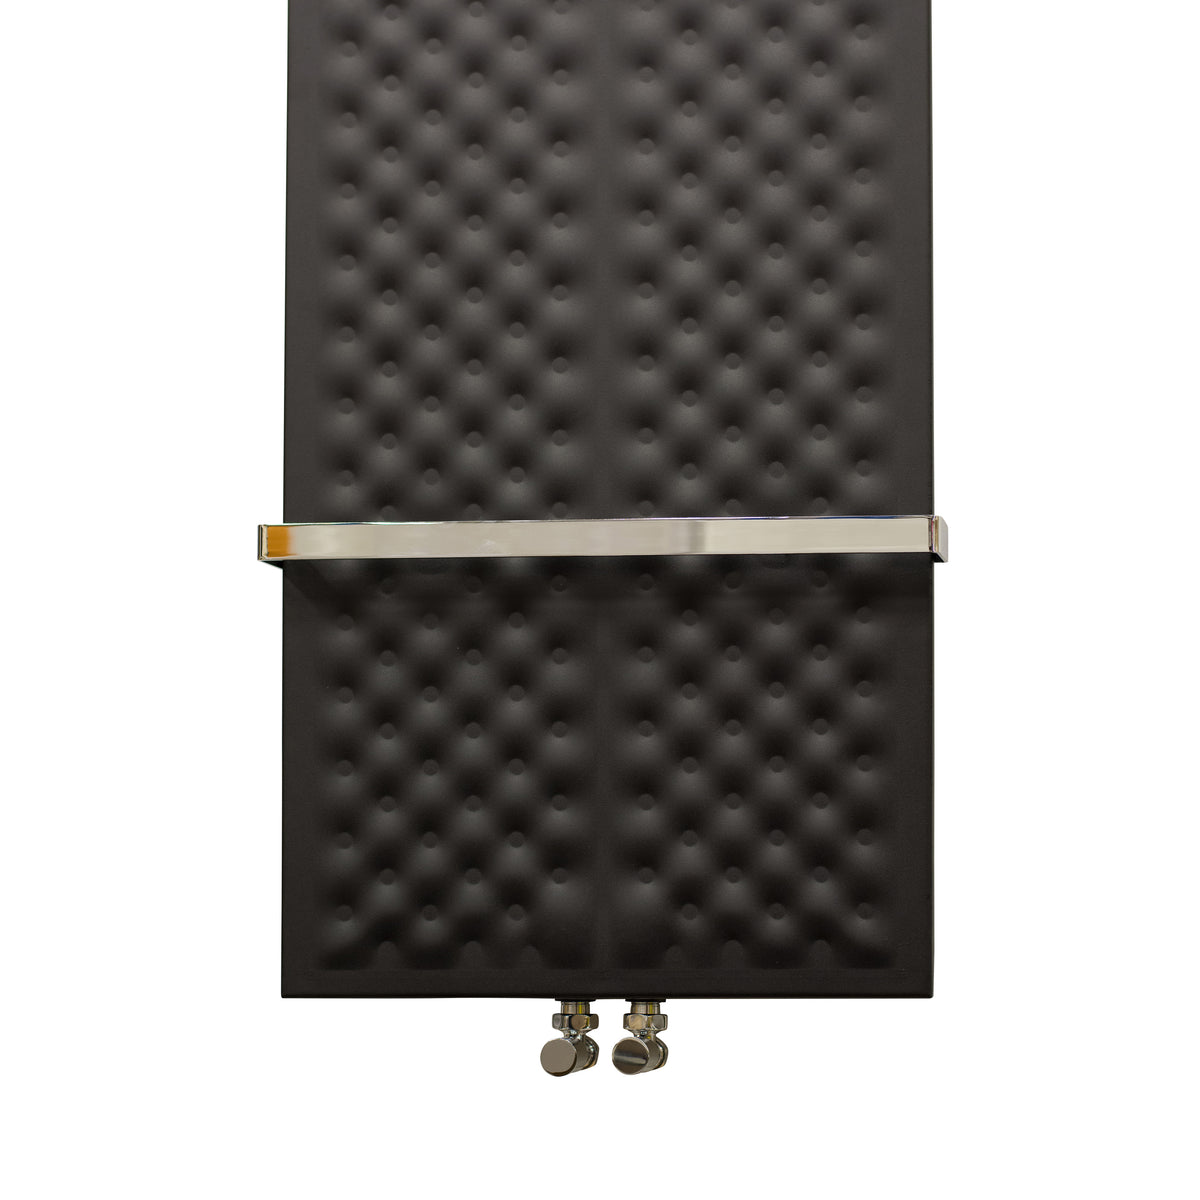 Designer Inno Style 1200 mm High x 450 mm Wide Heated Towel Rail Radiator Black - Elegant Radiators